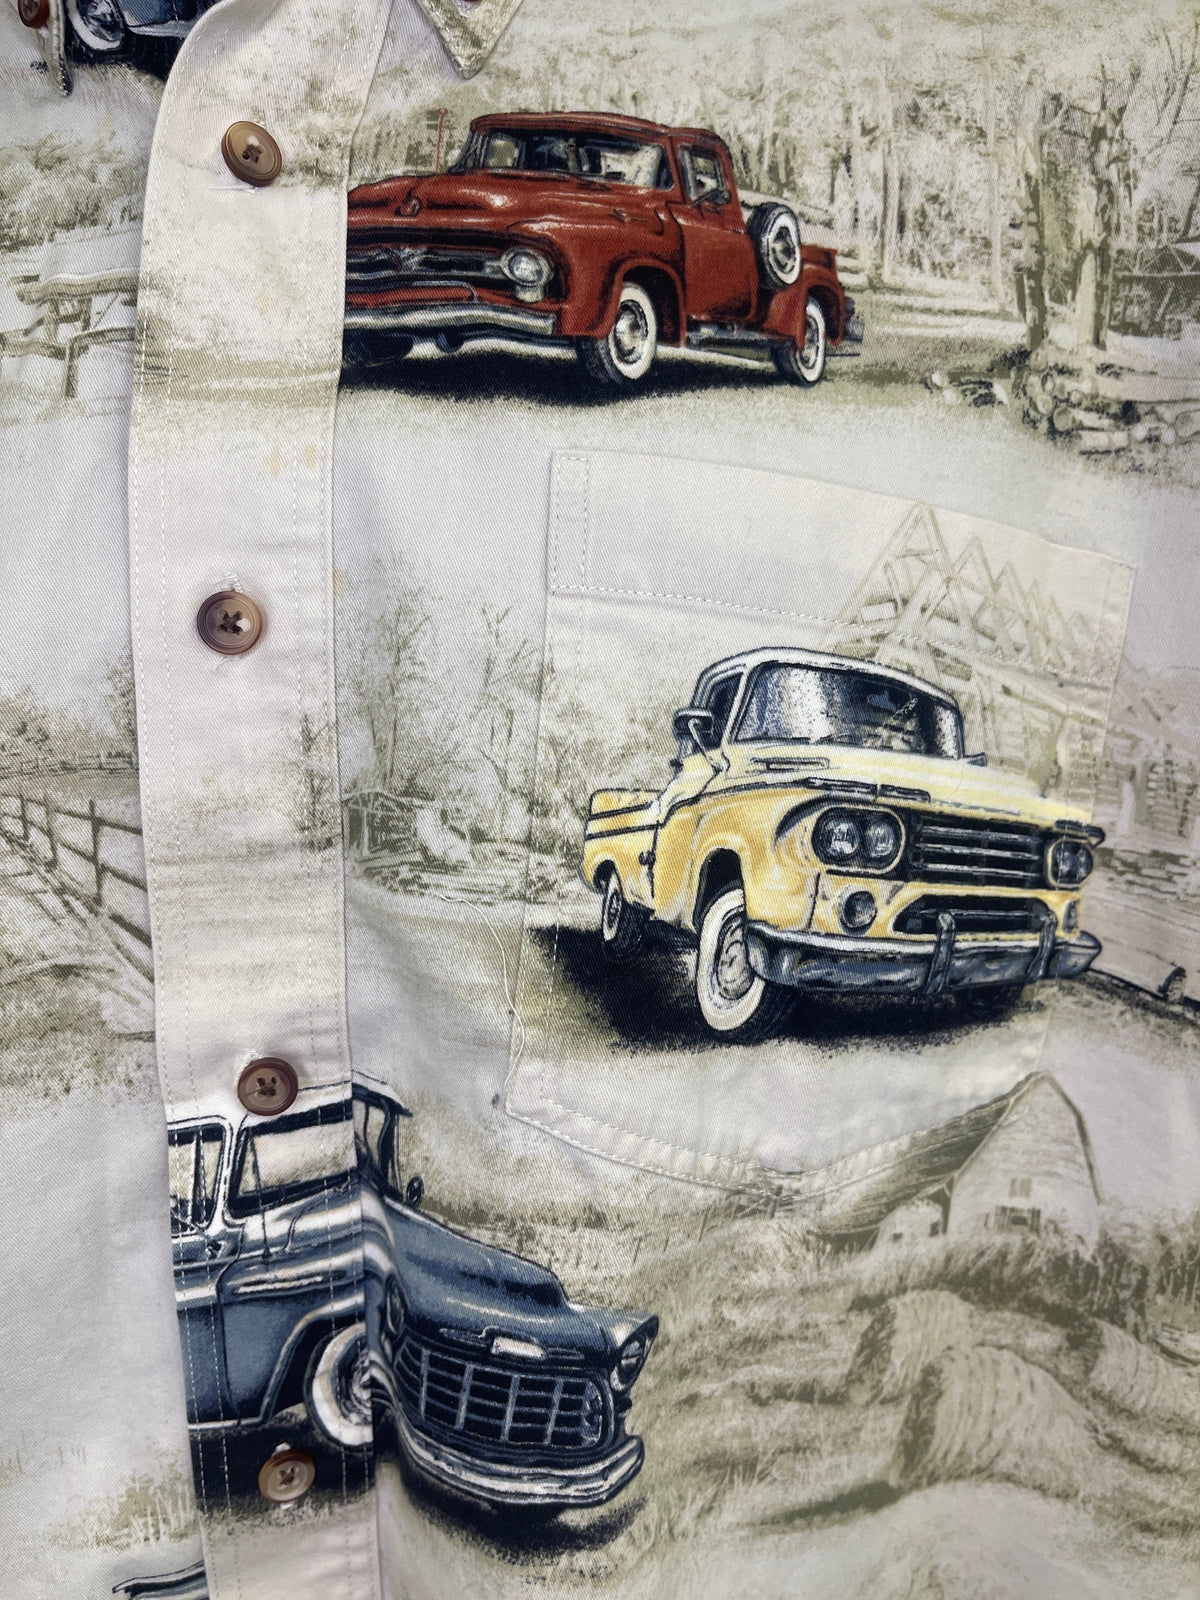 North River Clothing Classic American Trucks Printed Shirt Men's Large